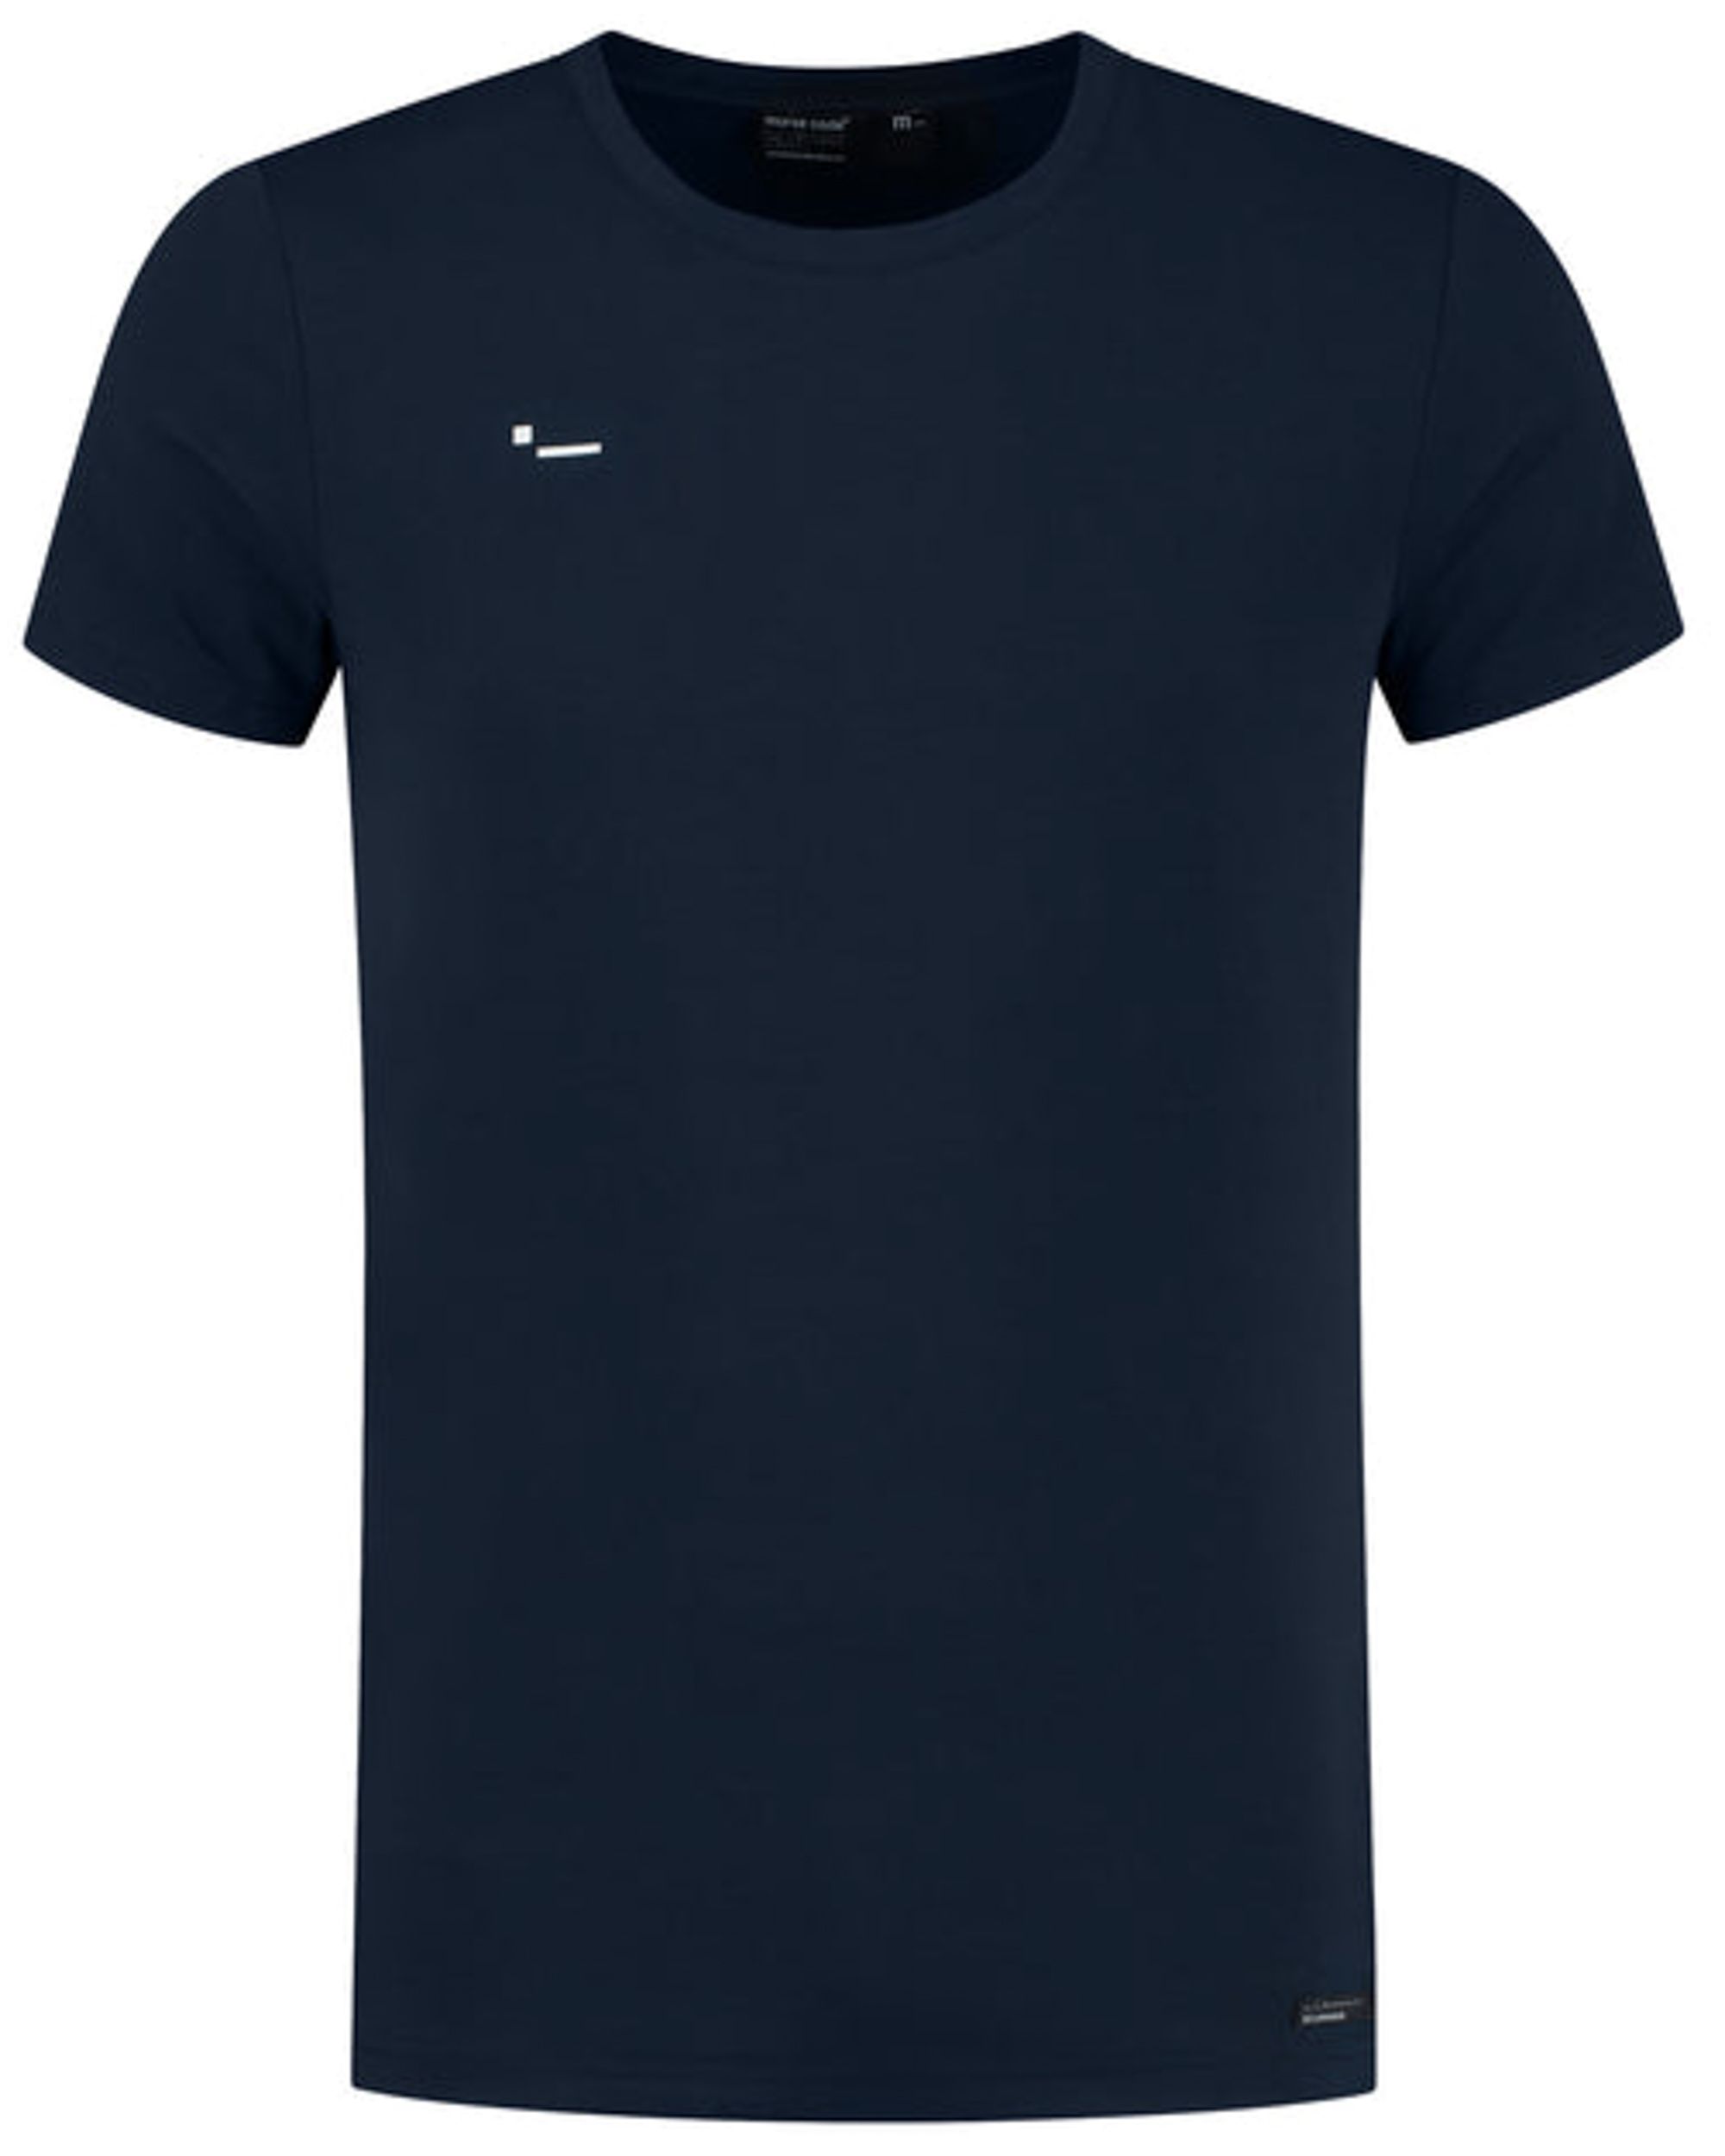 Morse Code T-shirt KM Donker blauw 094341-001-L